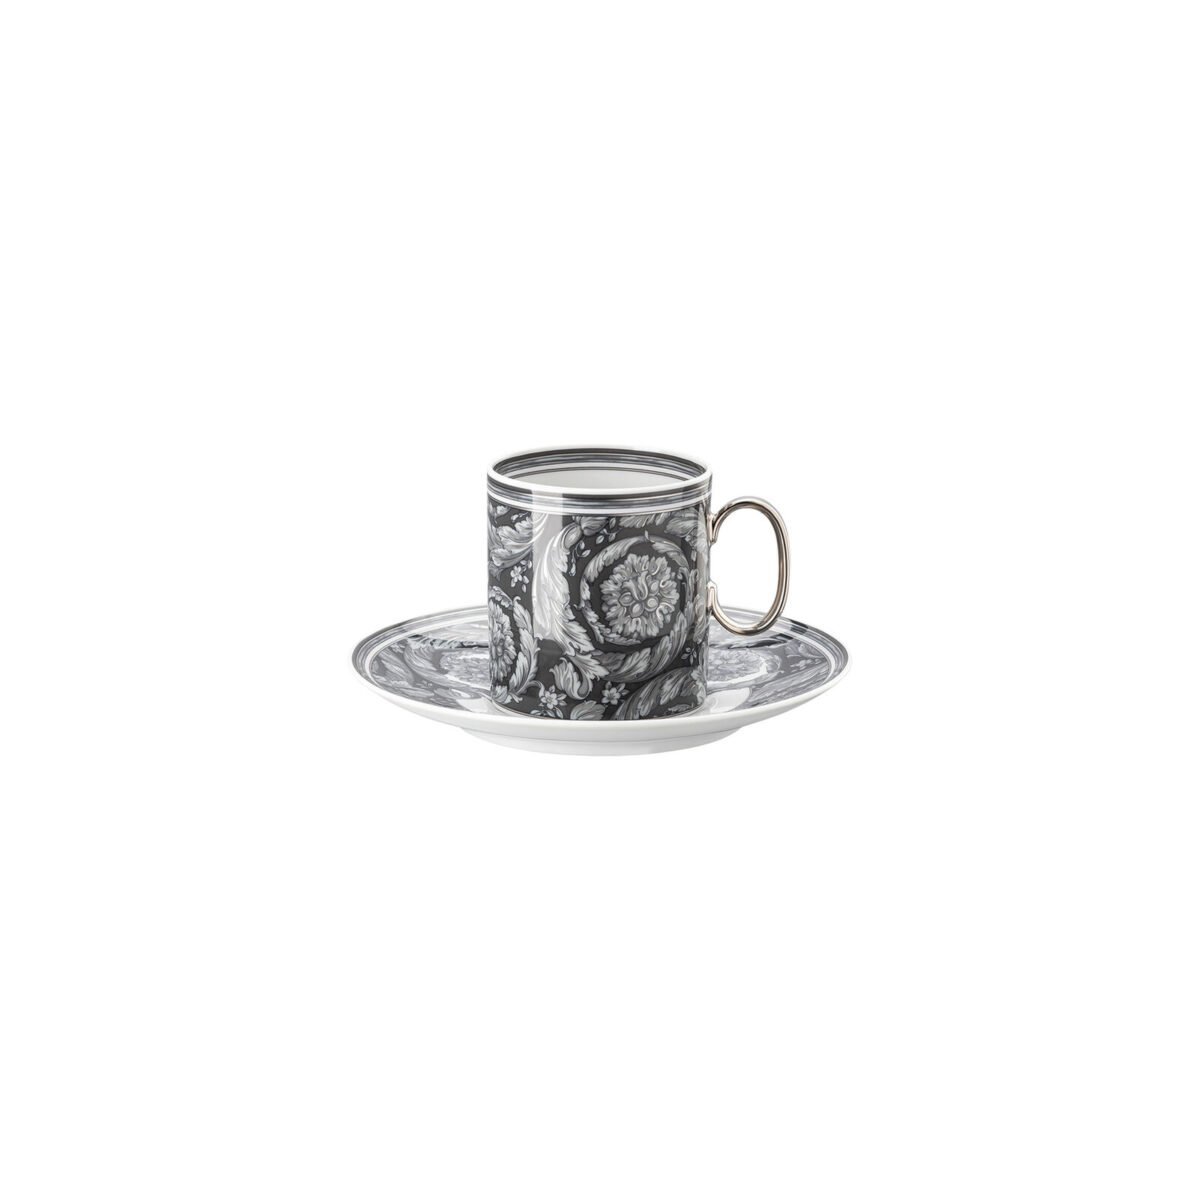 Versace Rosenthal Barocco Barocco Haze coffee cup and saucer